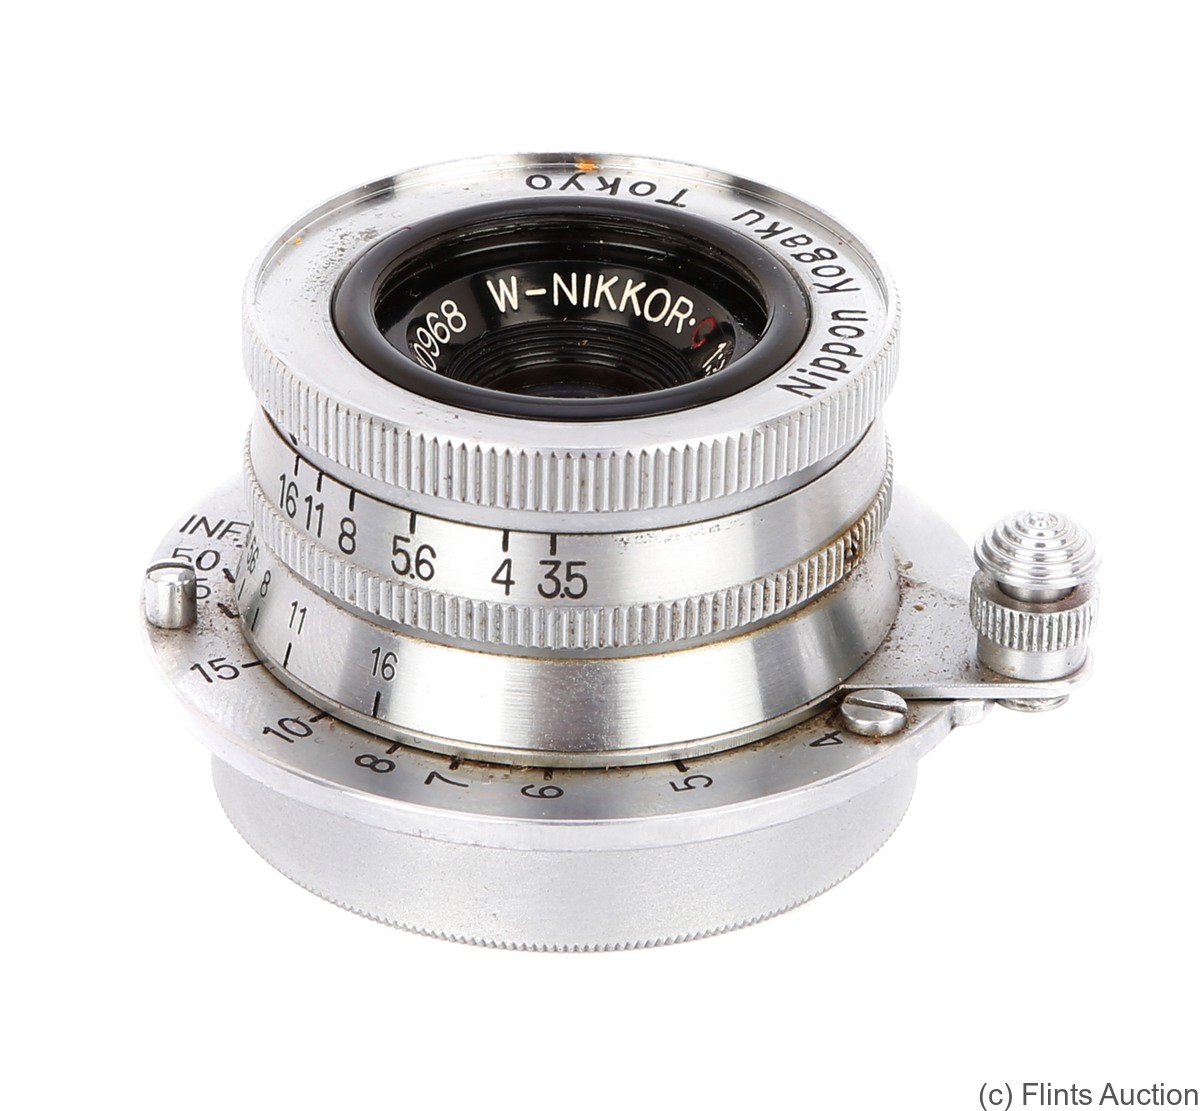 Nikon: 35mm (3.5cm) f3.5 W-Nikkor C (BM, chrome) camera